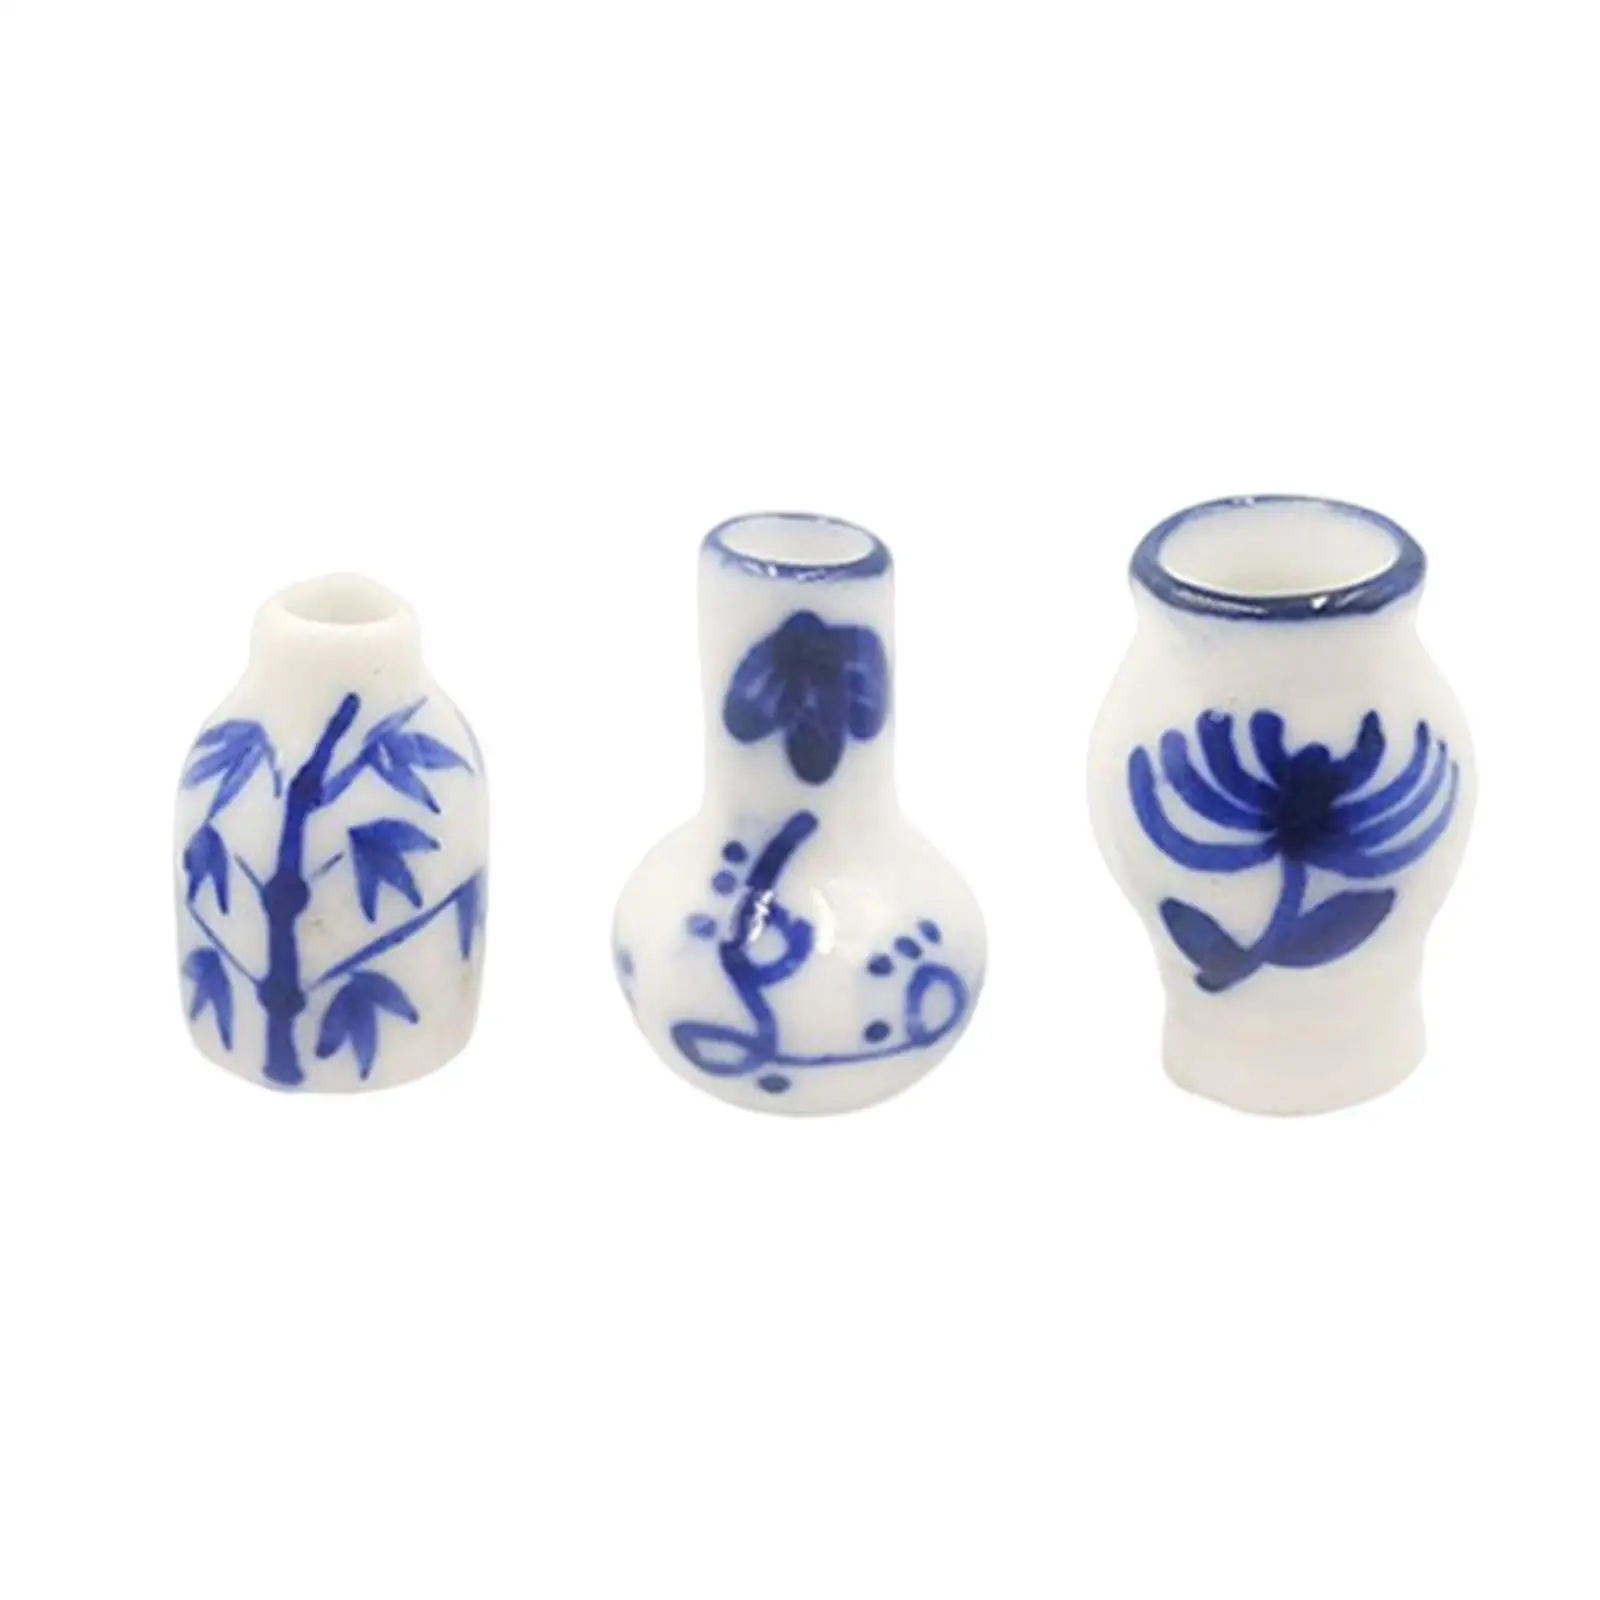 3 Count 1:12 Scale Porcelain Mini Vase Vessel Models for Plant